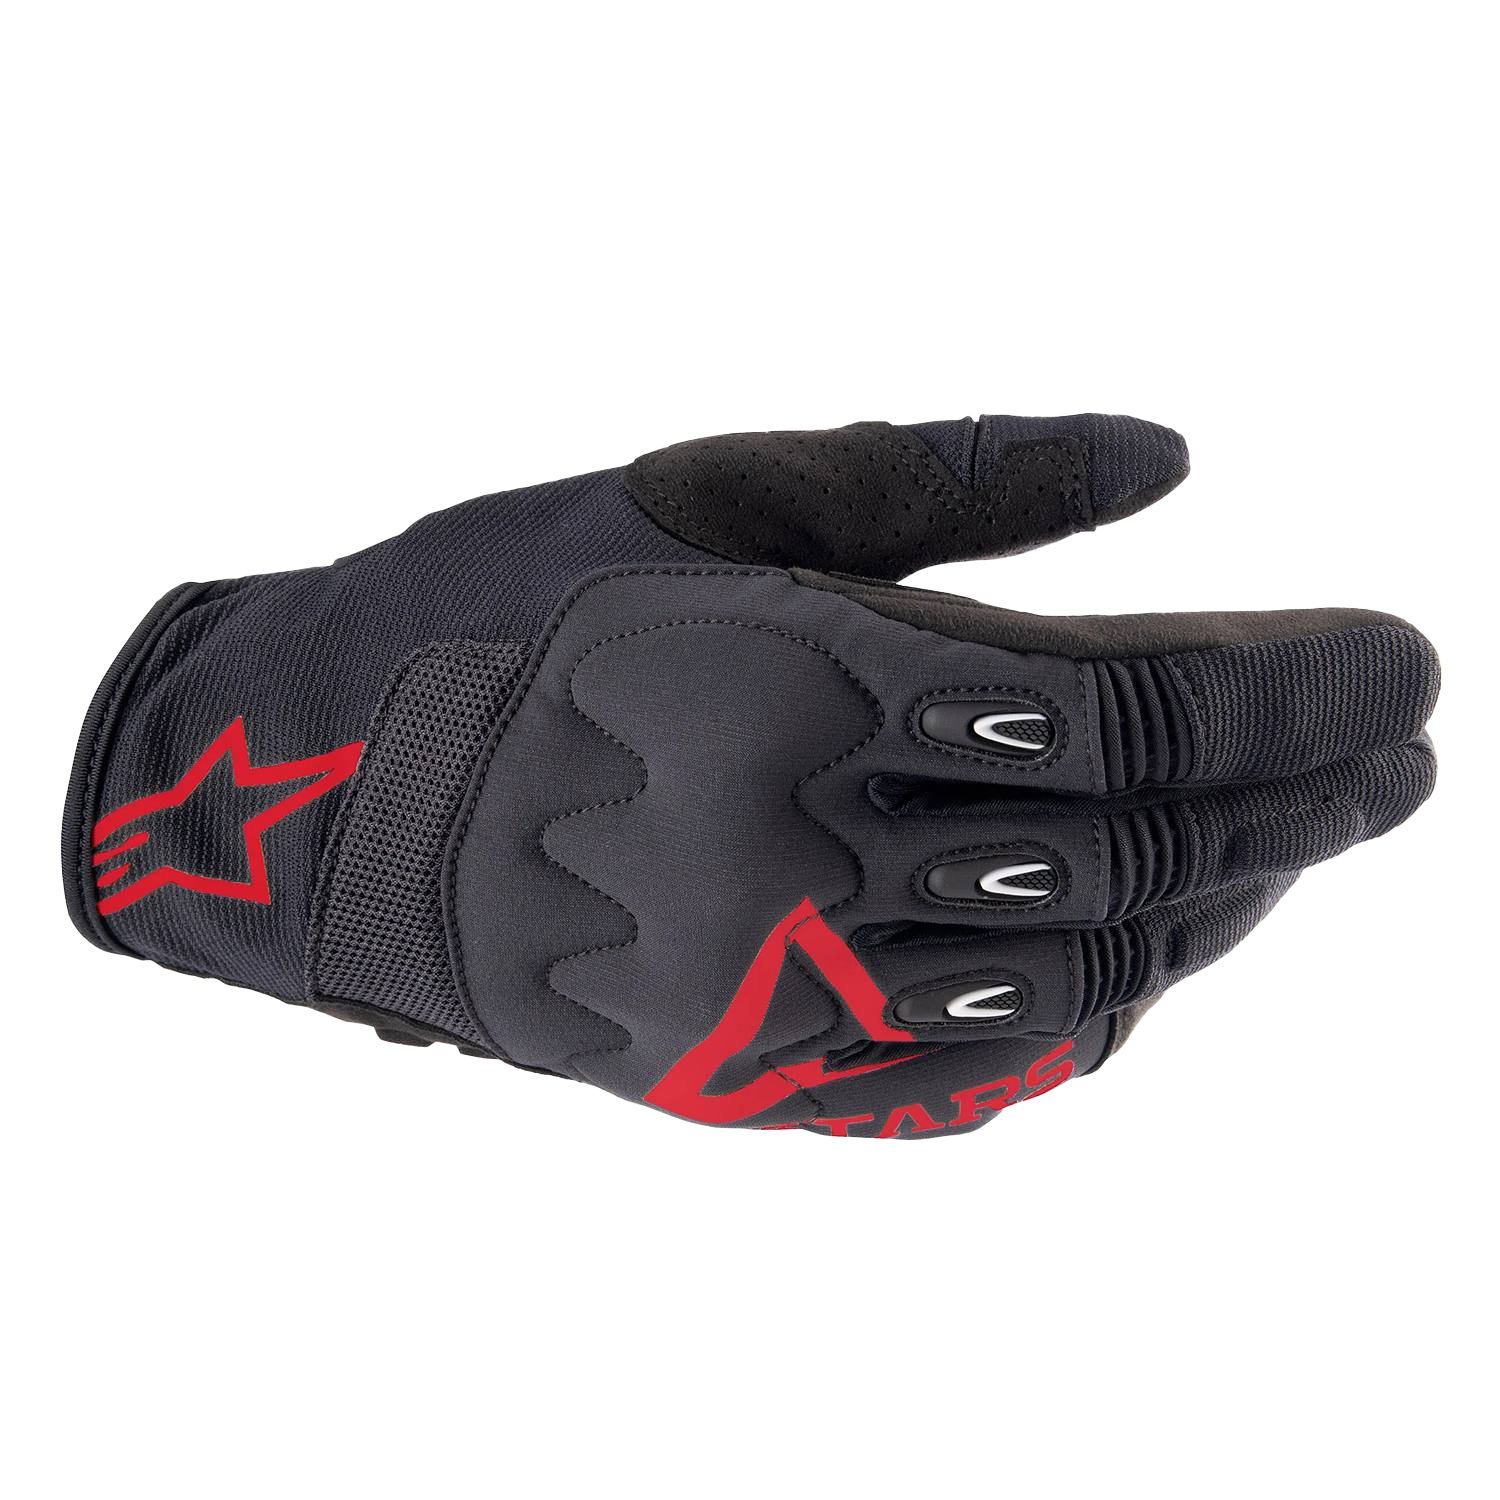 Image of Alpinestars Techdura Gloves Fire Red Black Size M ID 8059347247366